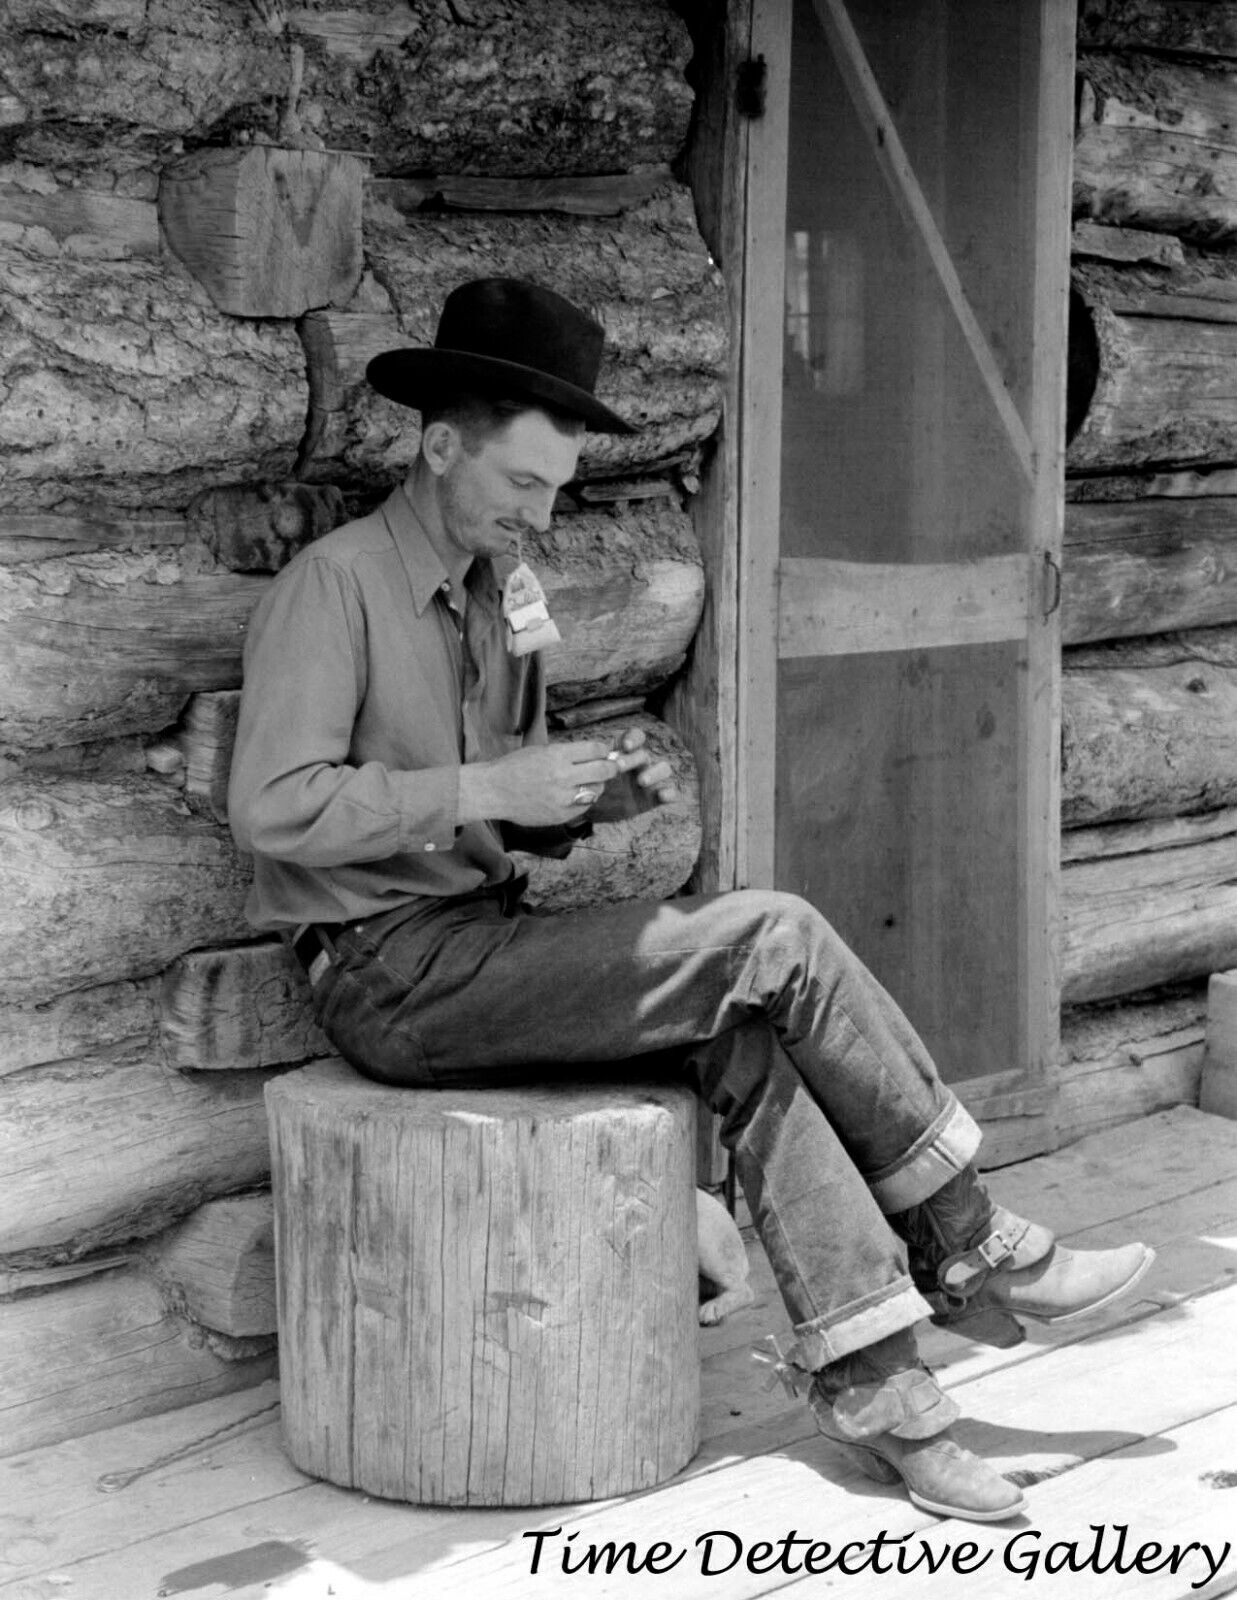 Cowboy Rolling a Cigarette, Pie Town, New Mexico - 1940 - Vintage Photo Print